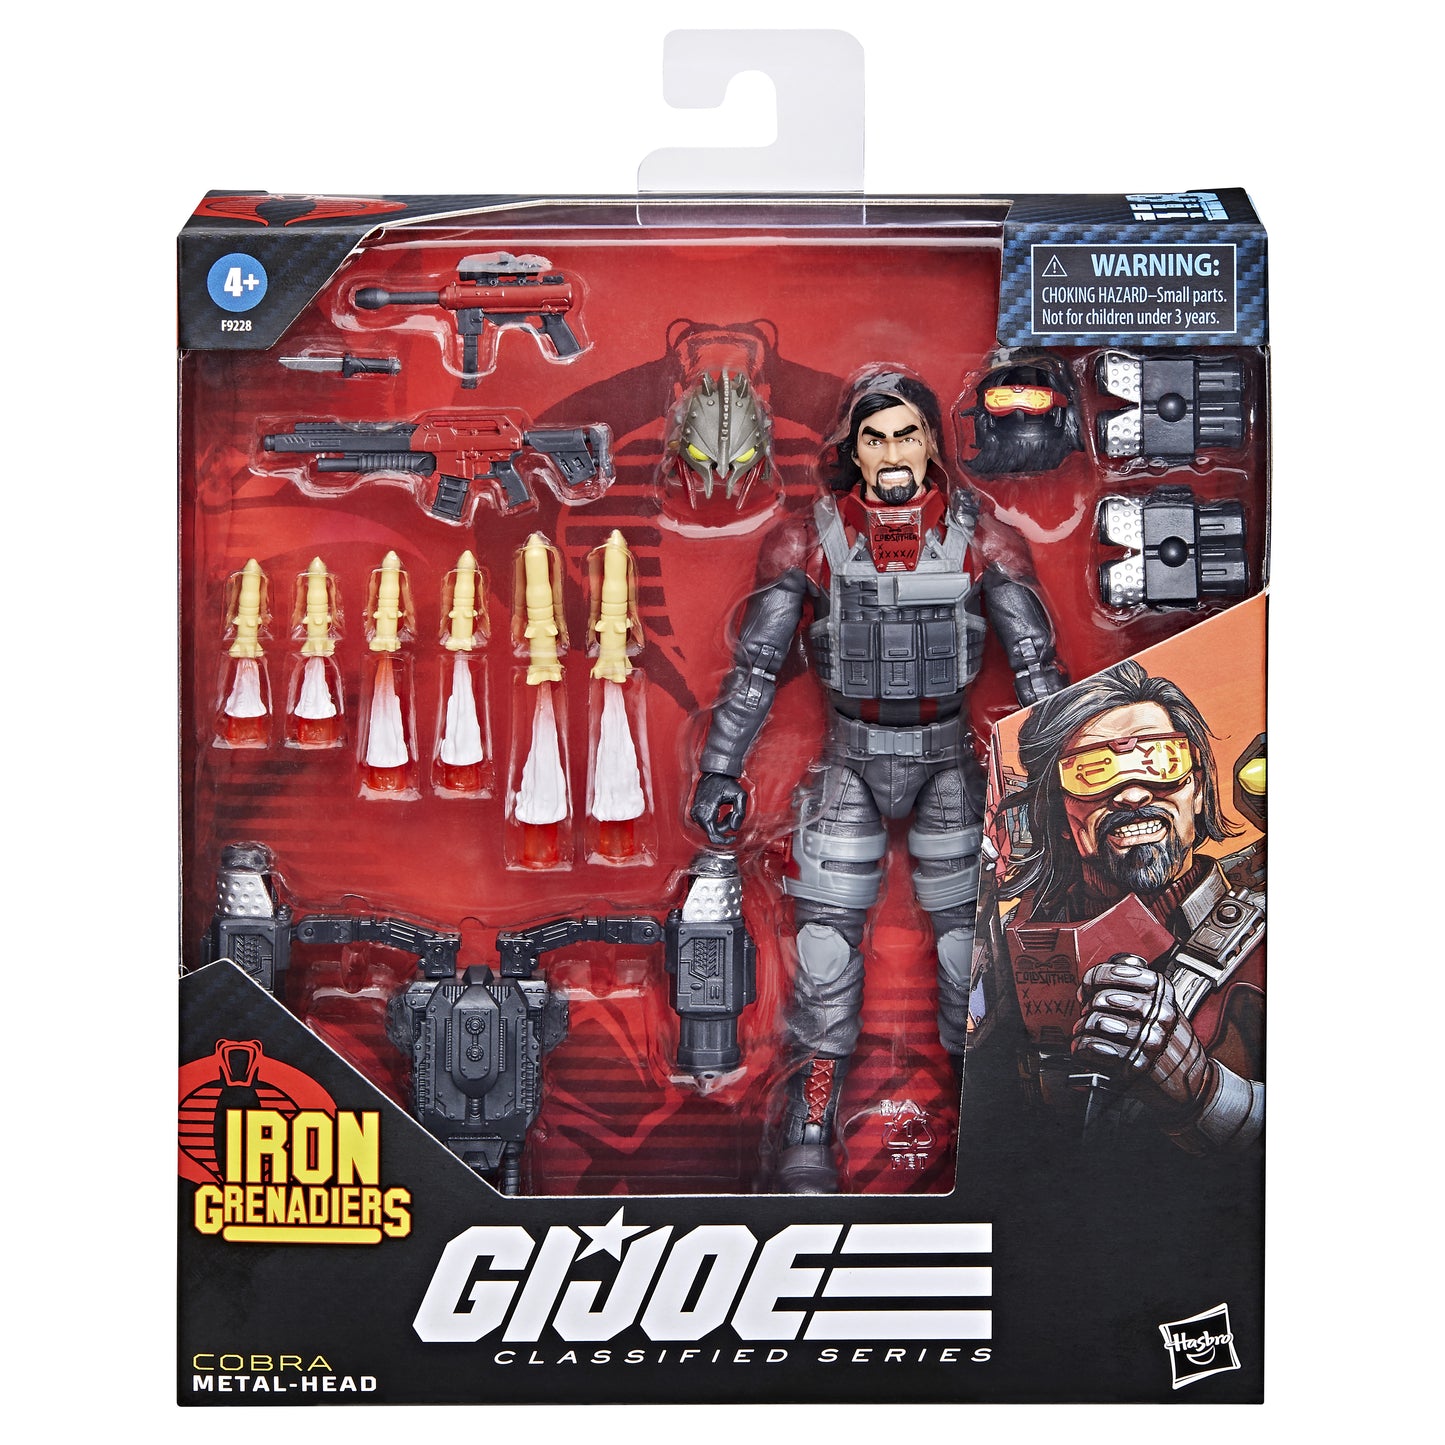 G.I. Joe Classified Series #118, Iron Grenadier Metal-Head Action Figure Toy